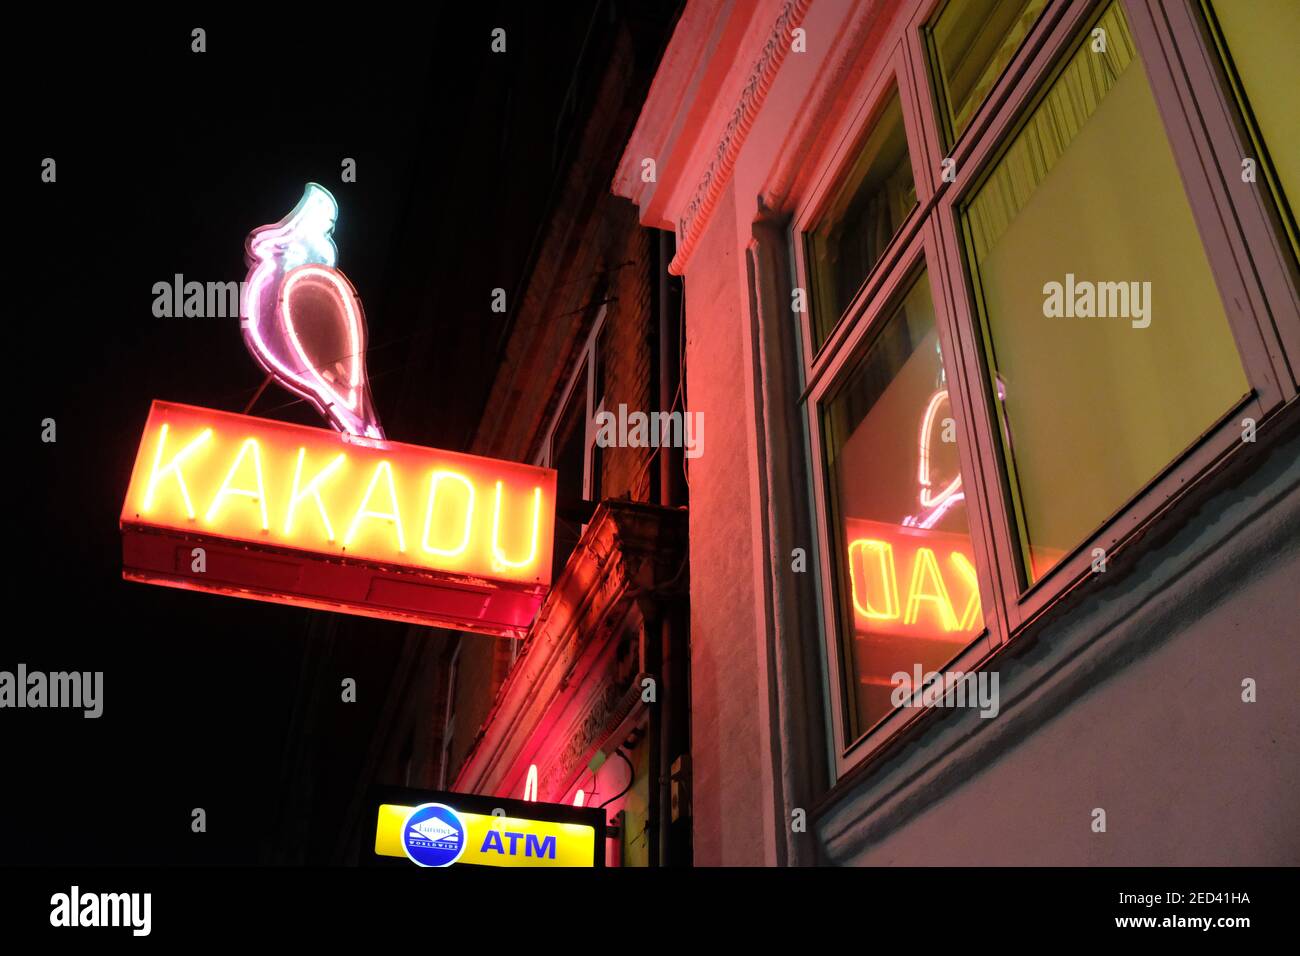 COPENHAGEN, DENMARK - 8TH JANUARY 2019: An illuminated neon bar sign for Kakadu exclusive strip club. Stock Photo